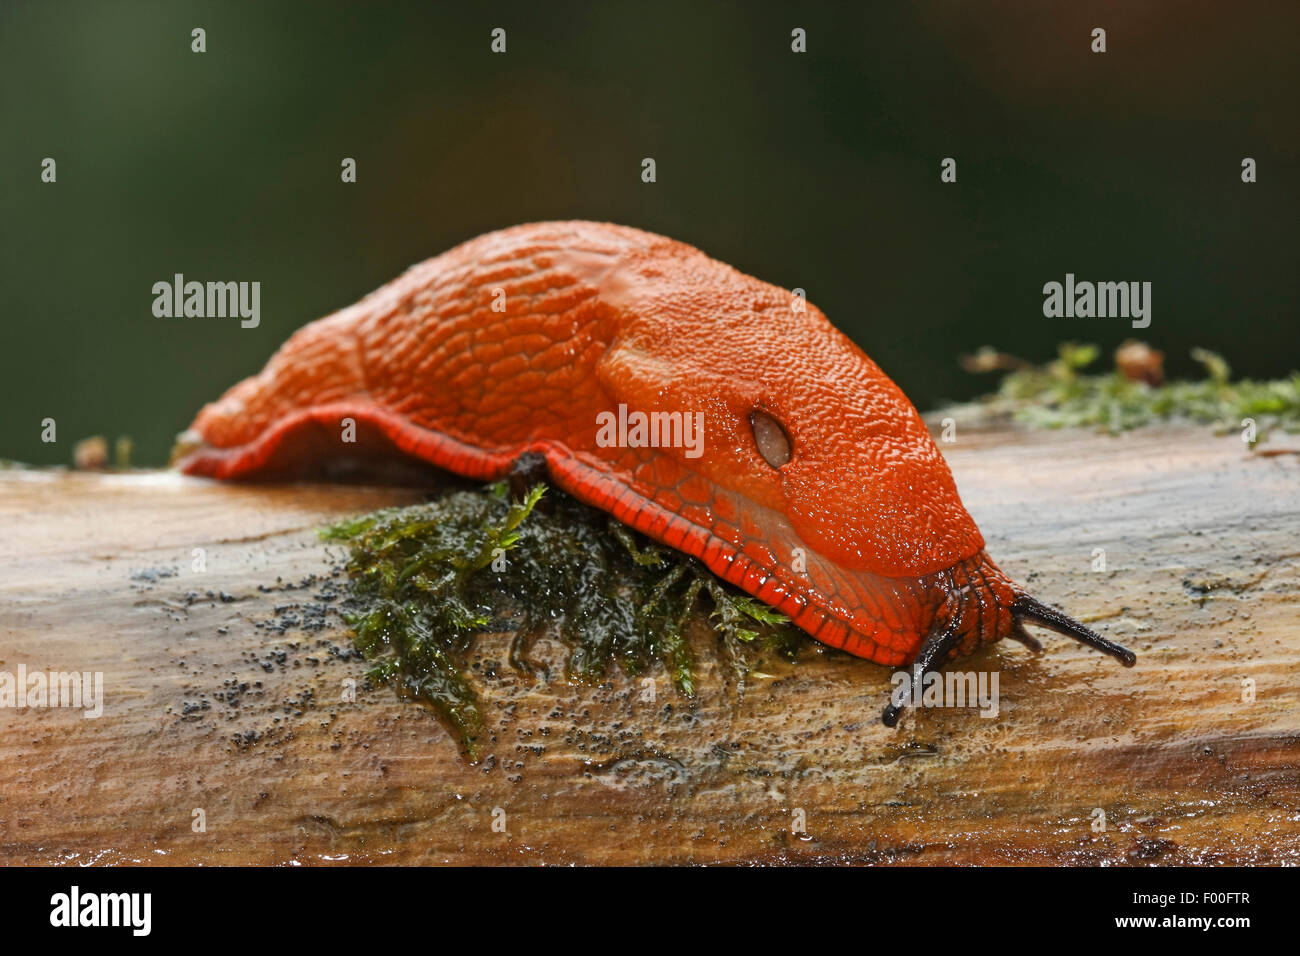 Large red slug, Greater red slug, Chocolate arion (Arion rufus, Arion ater, Arion ater ssp. rufus), creeping on a branch, Germany Stock Photo